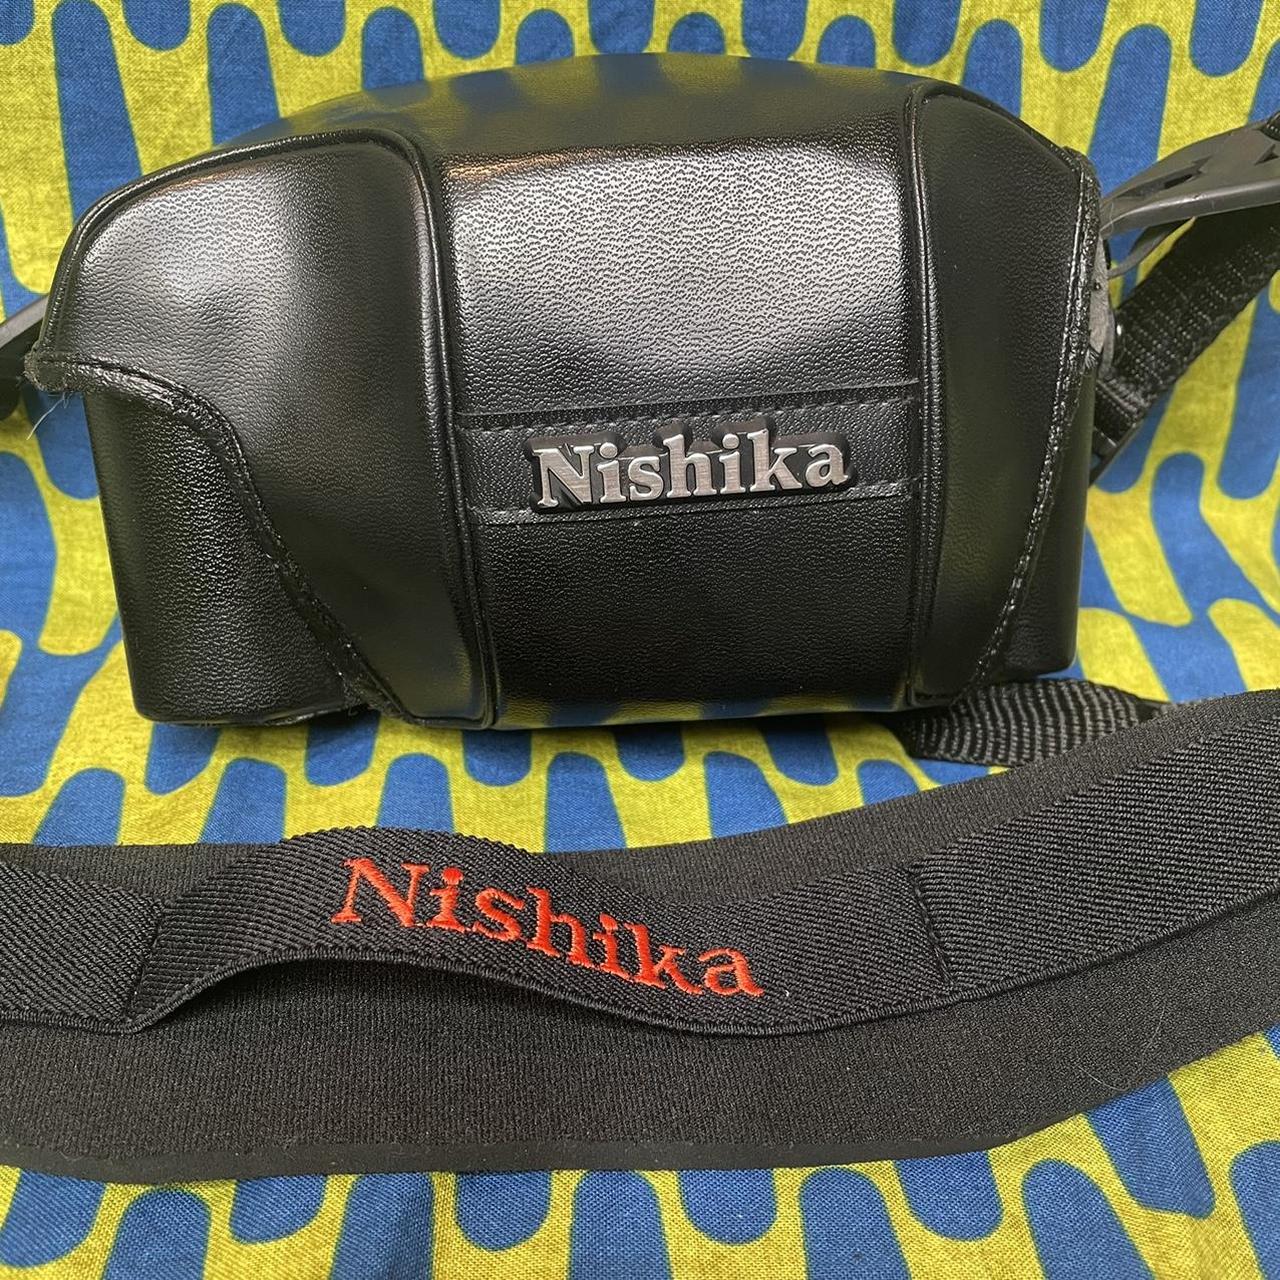 Product Image 3 - Nishika n8000 - FILM TESTED,